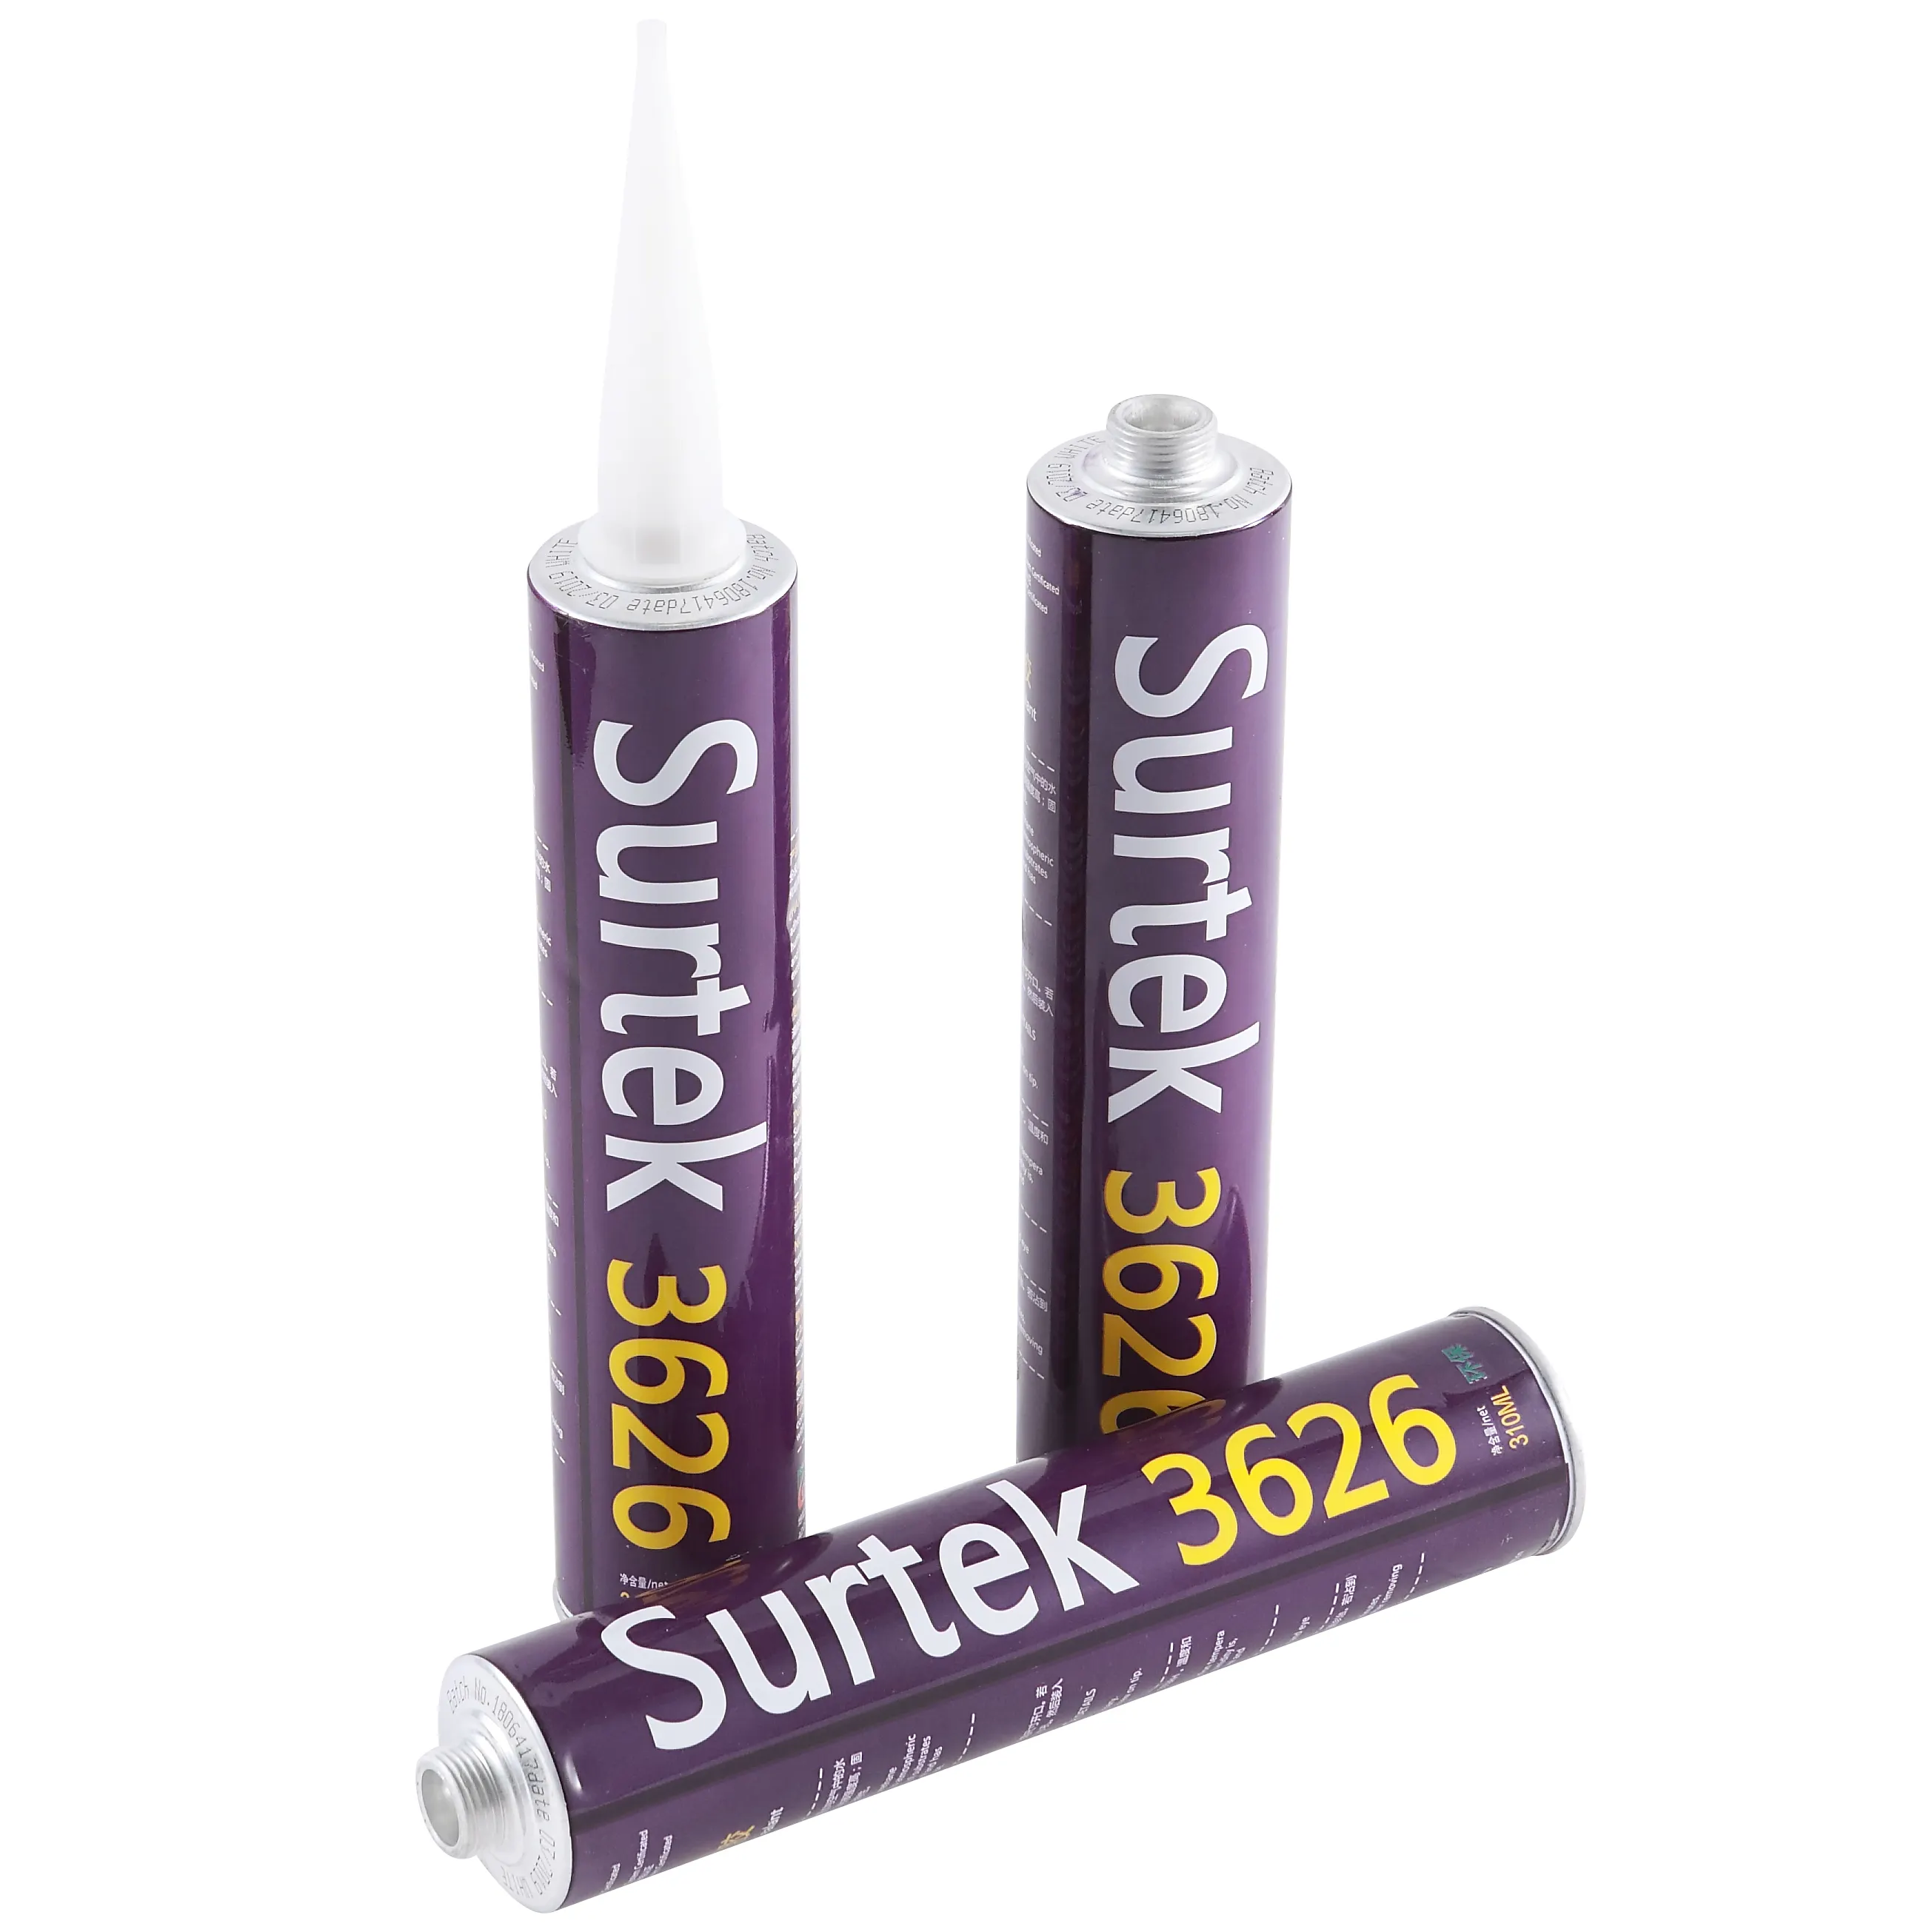 Comenflex/Surtek ยี่ห้อ Polyurethane Sealant สำหรับซันรูฟ/พื้นผิวซีล/bus body sealer